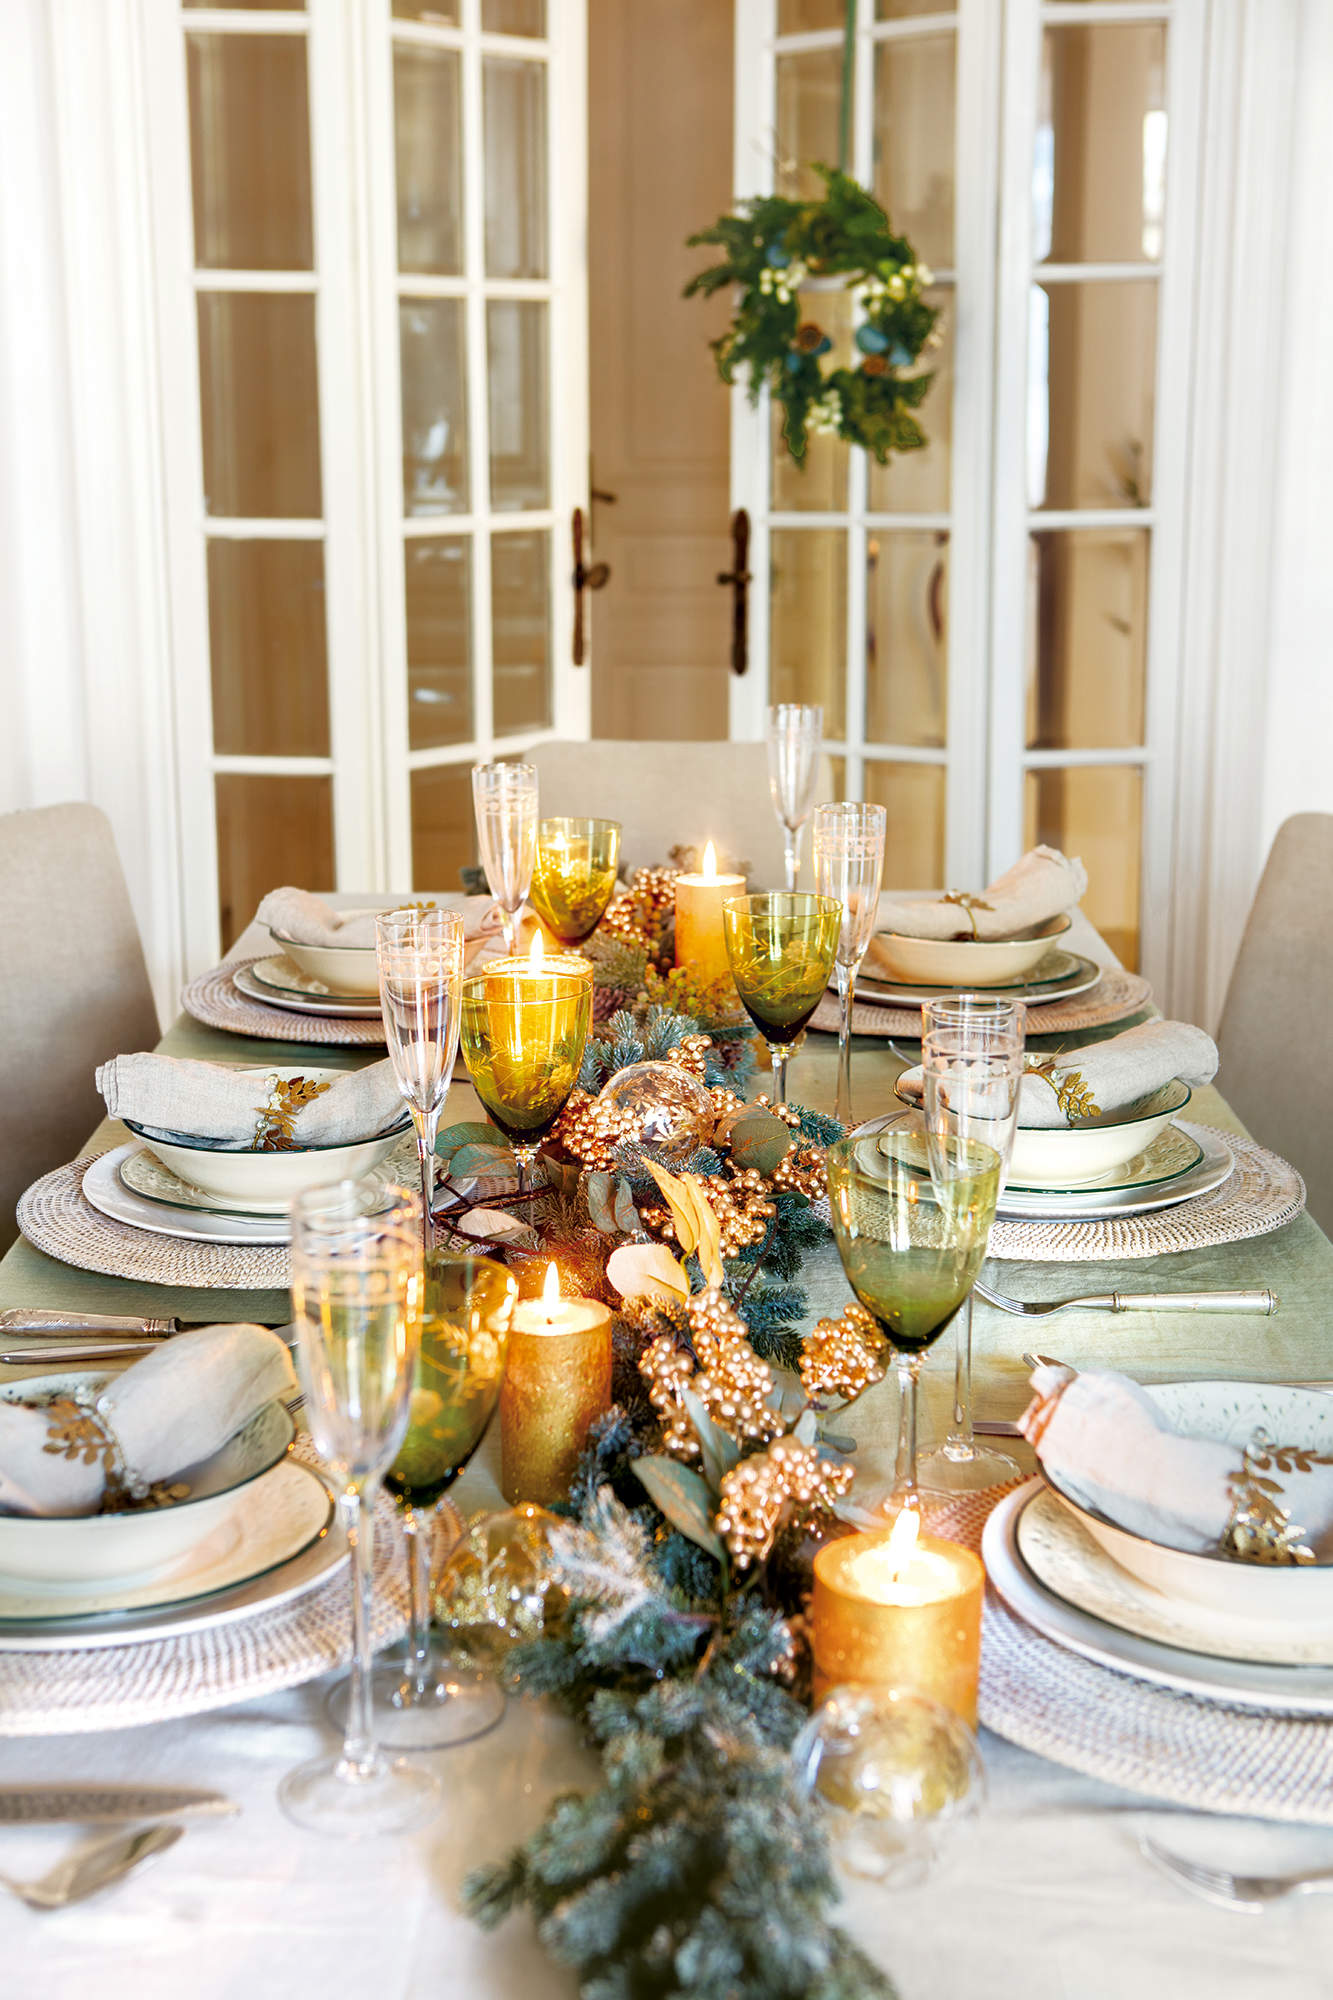 Centro de mesa con velas doradas y ramas naturales con hojas pintadas